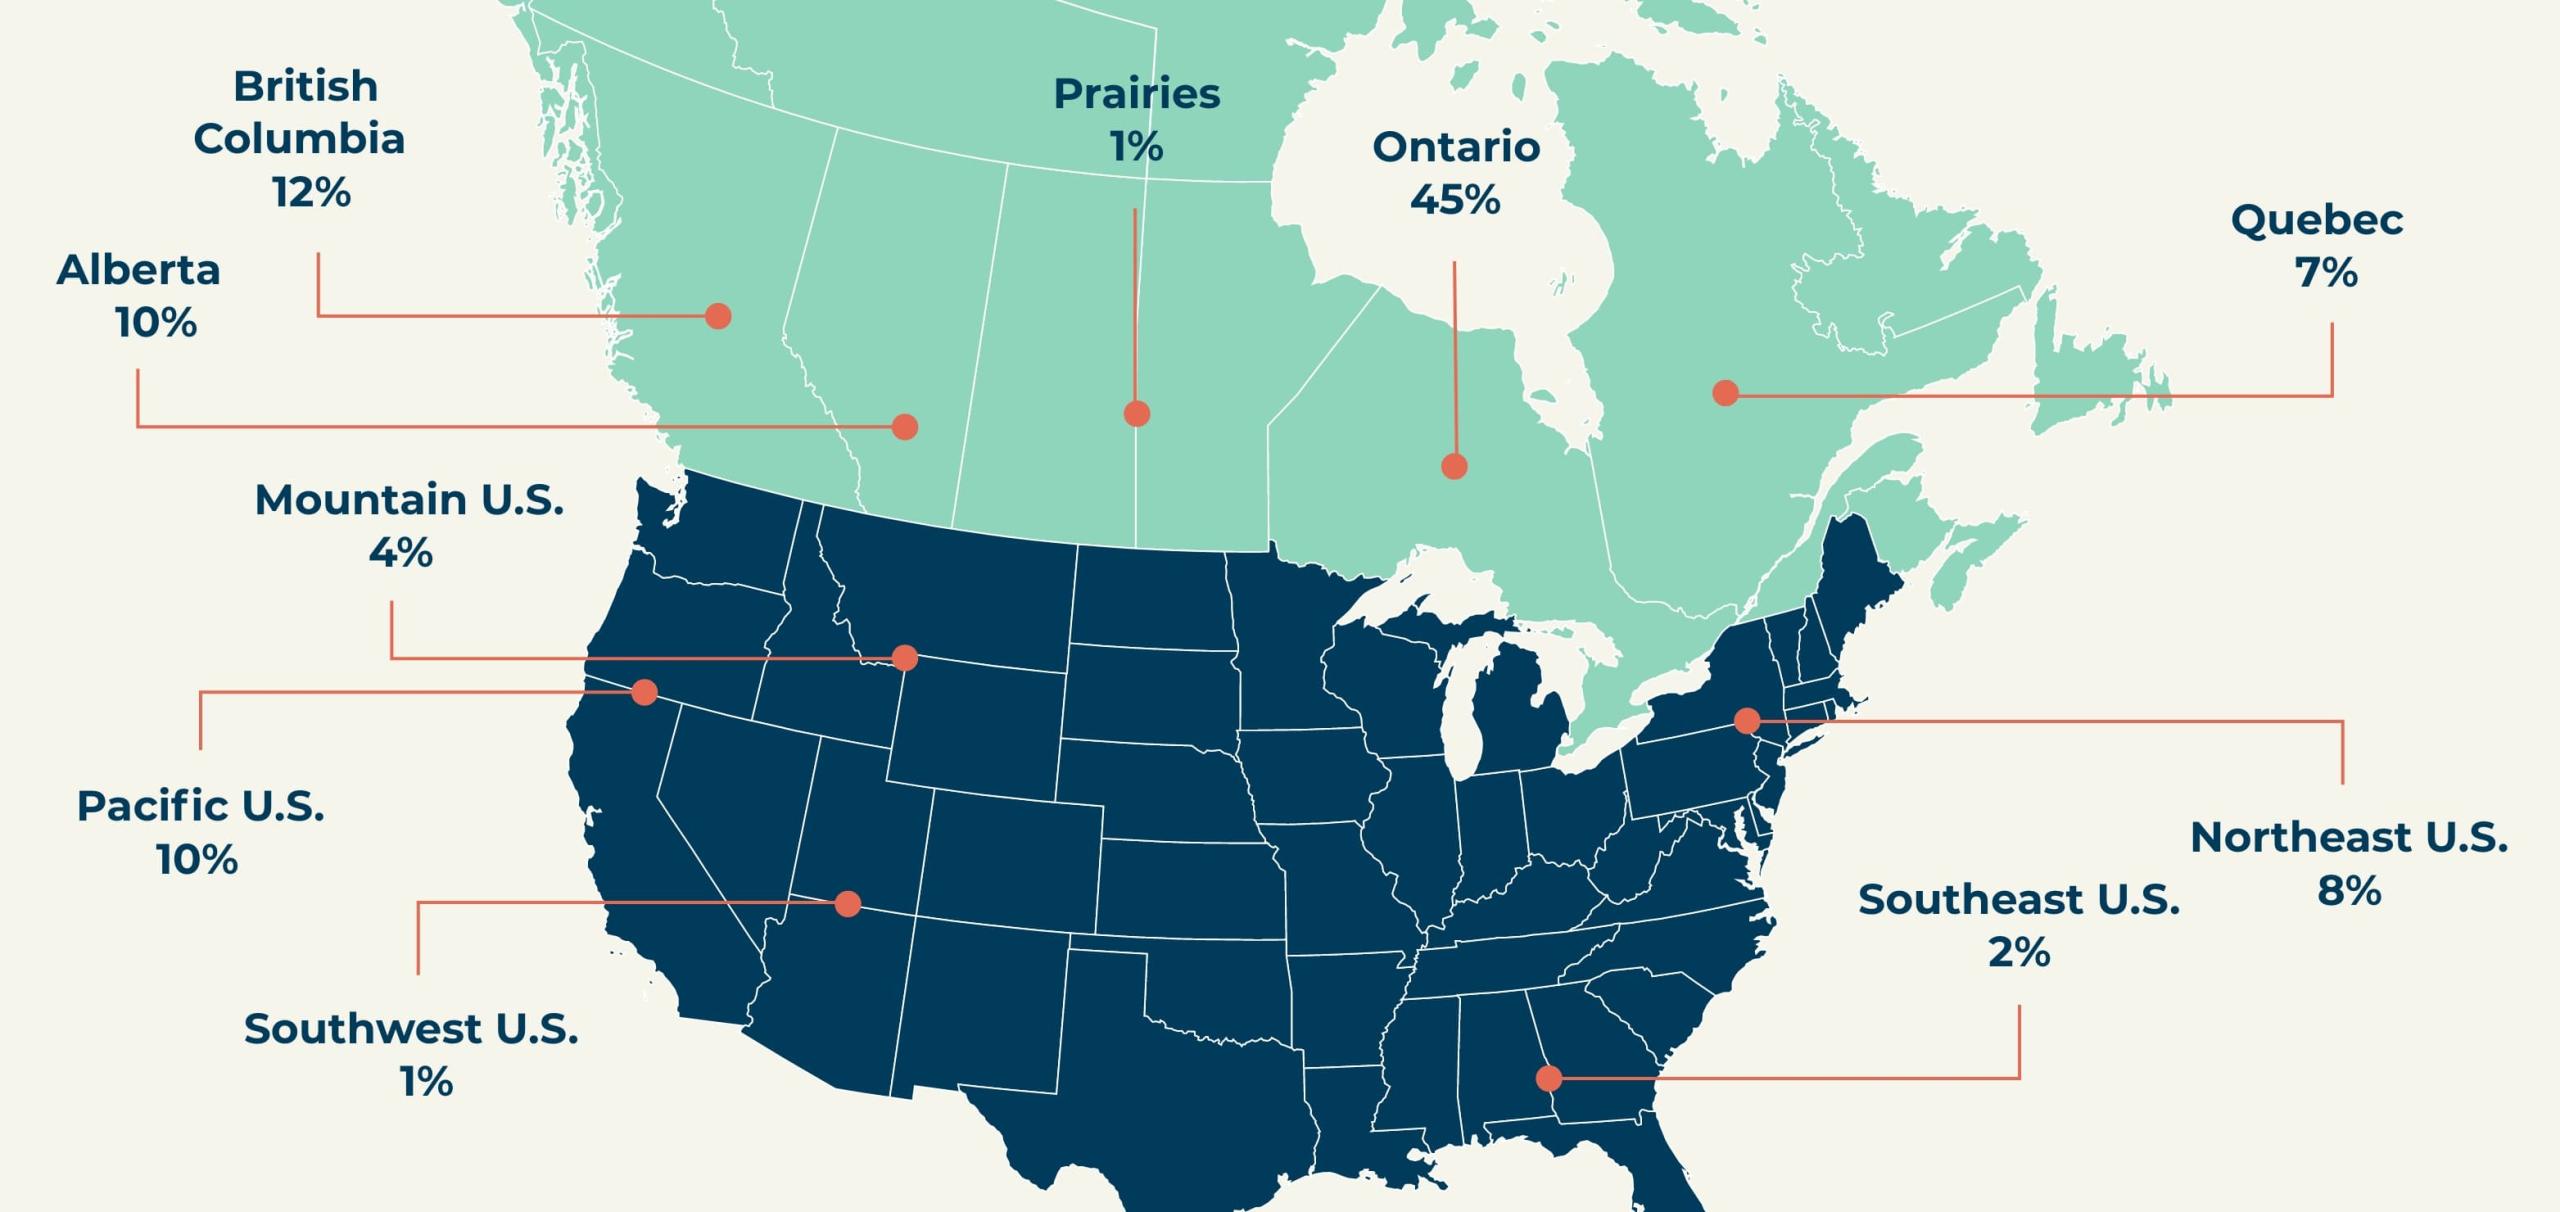 Holdings by geography: British Columbia 12%, Alberta 10%, Prairies 1%, Ontario 45%, Quebec 7%, Mountain U.S. 4%, Pacific U.S. 10%, Southwest U.S. 1%, Northeast U.S. 8%, Southeast U.S. 2%